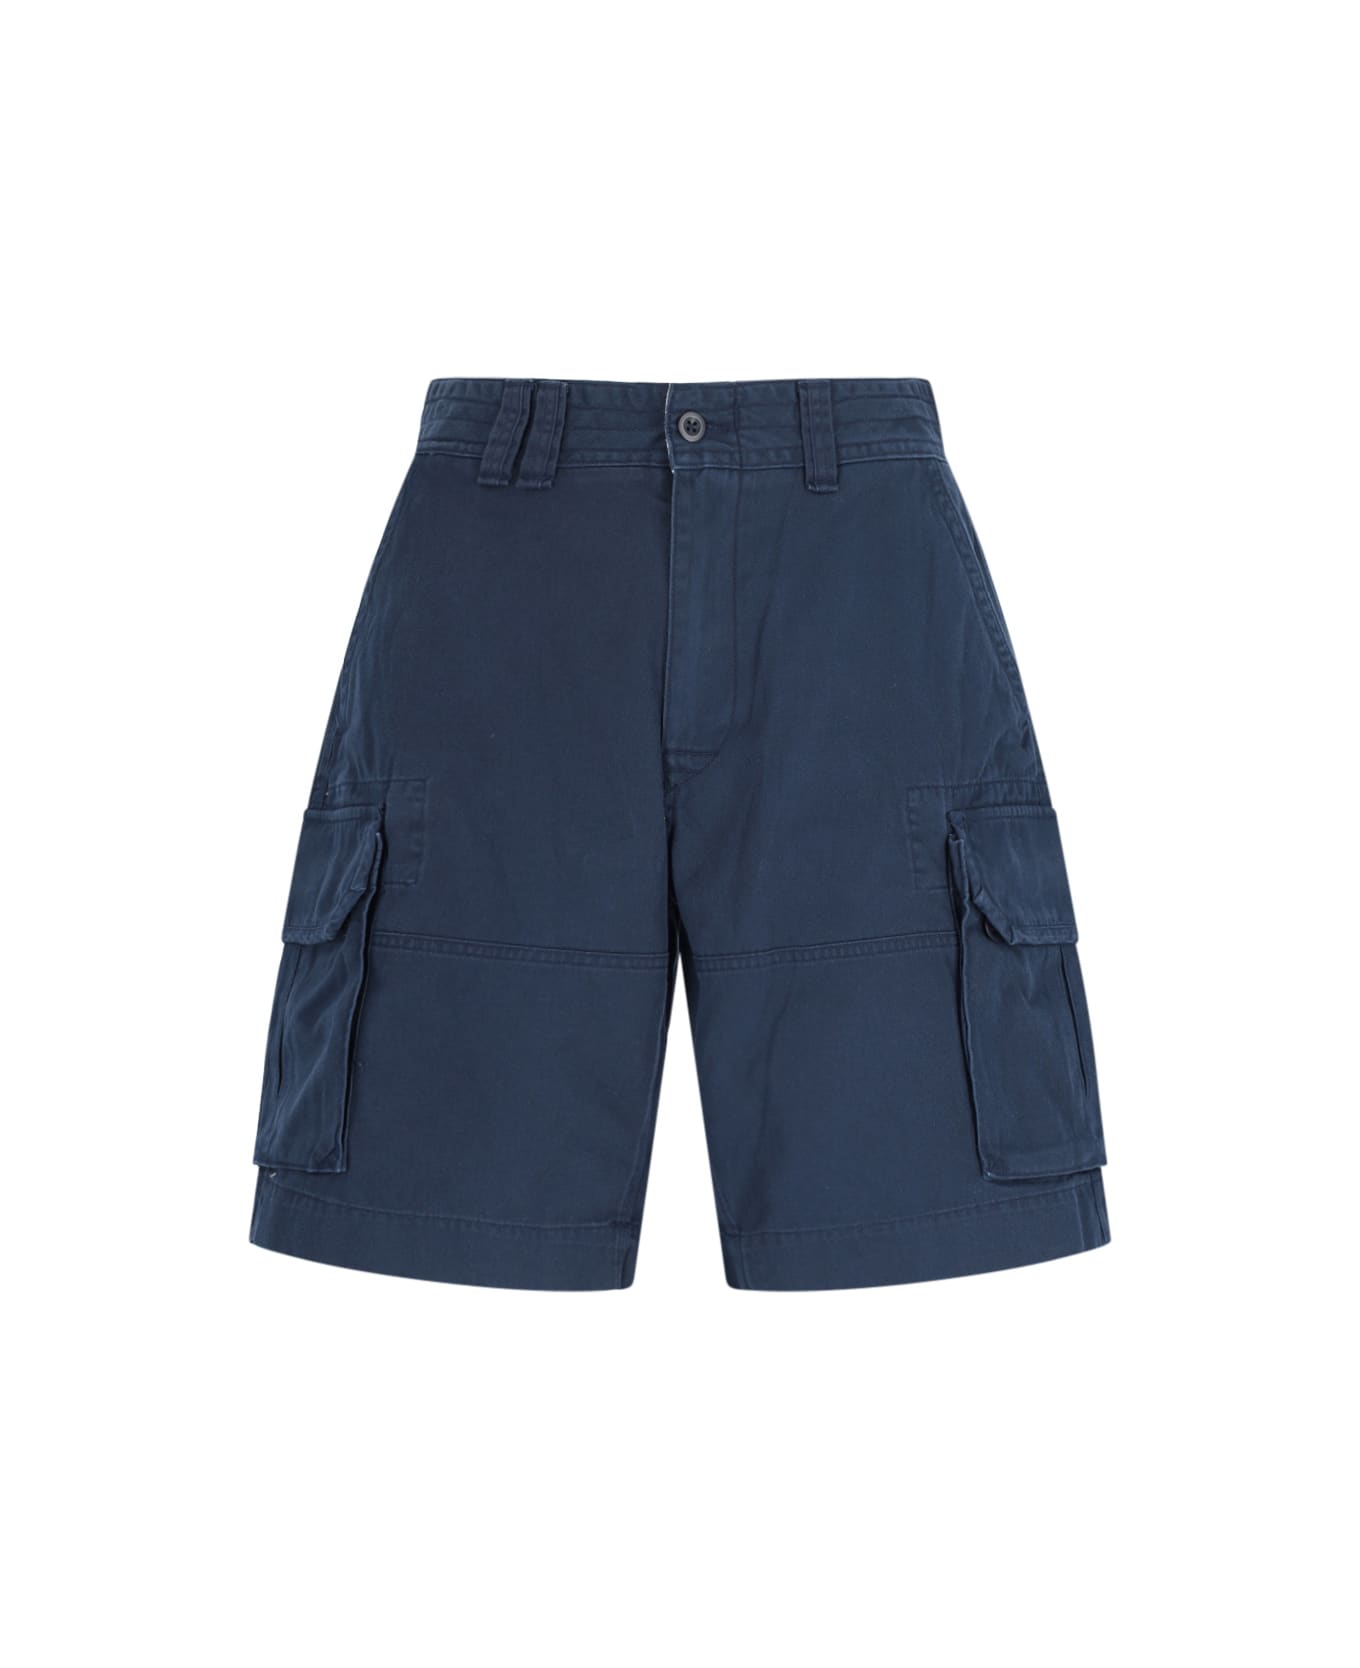 Polo Ralph Lauren Cargo Shorts - Navy Blue